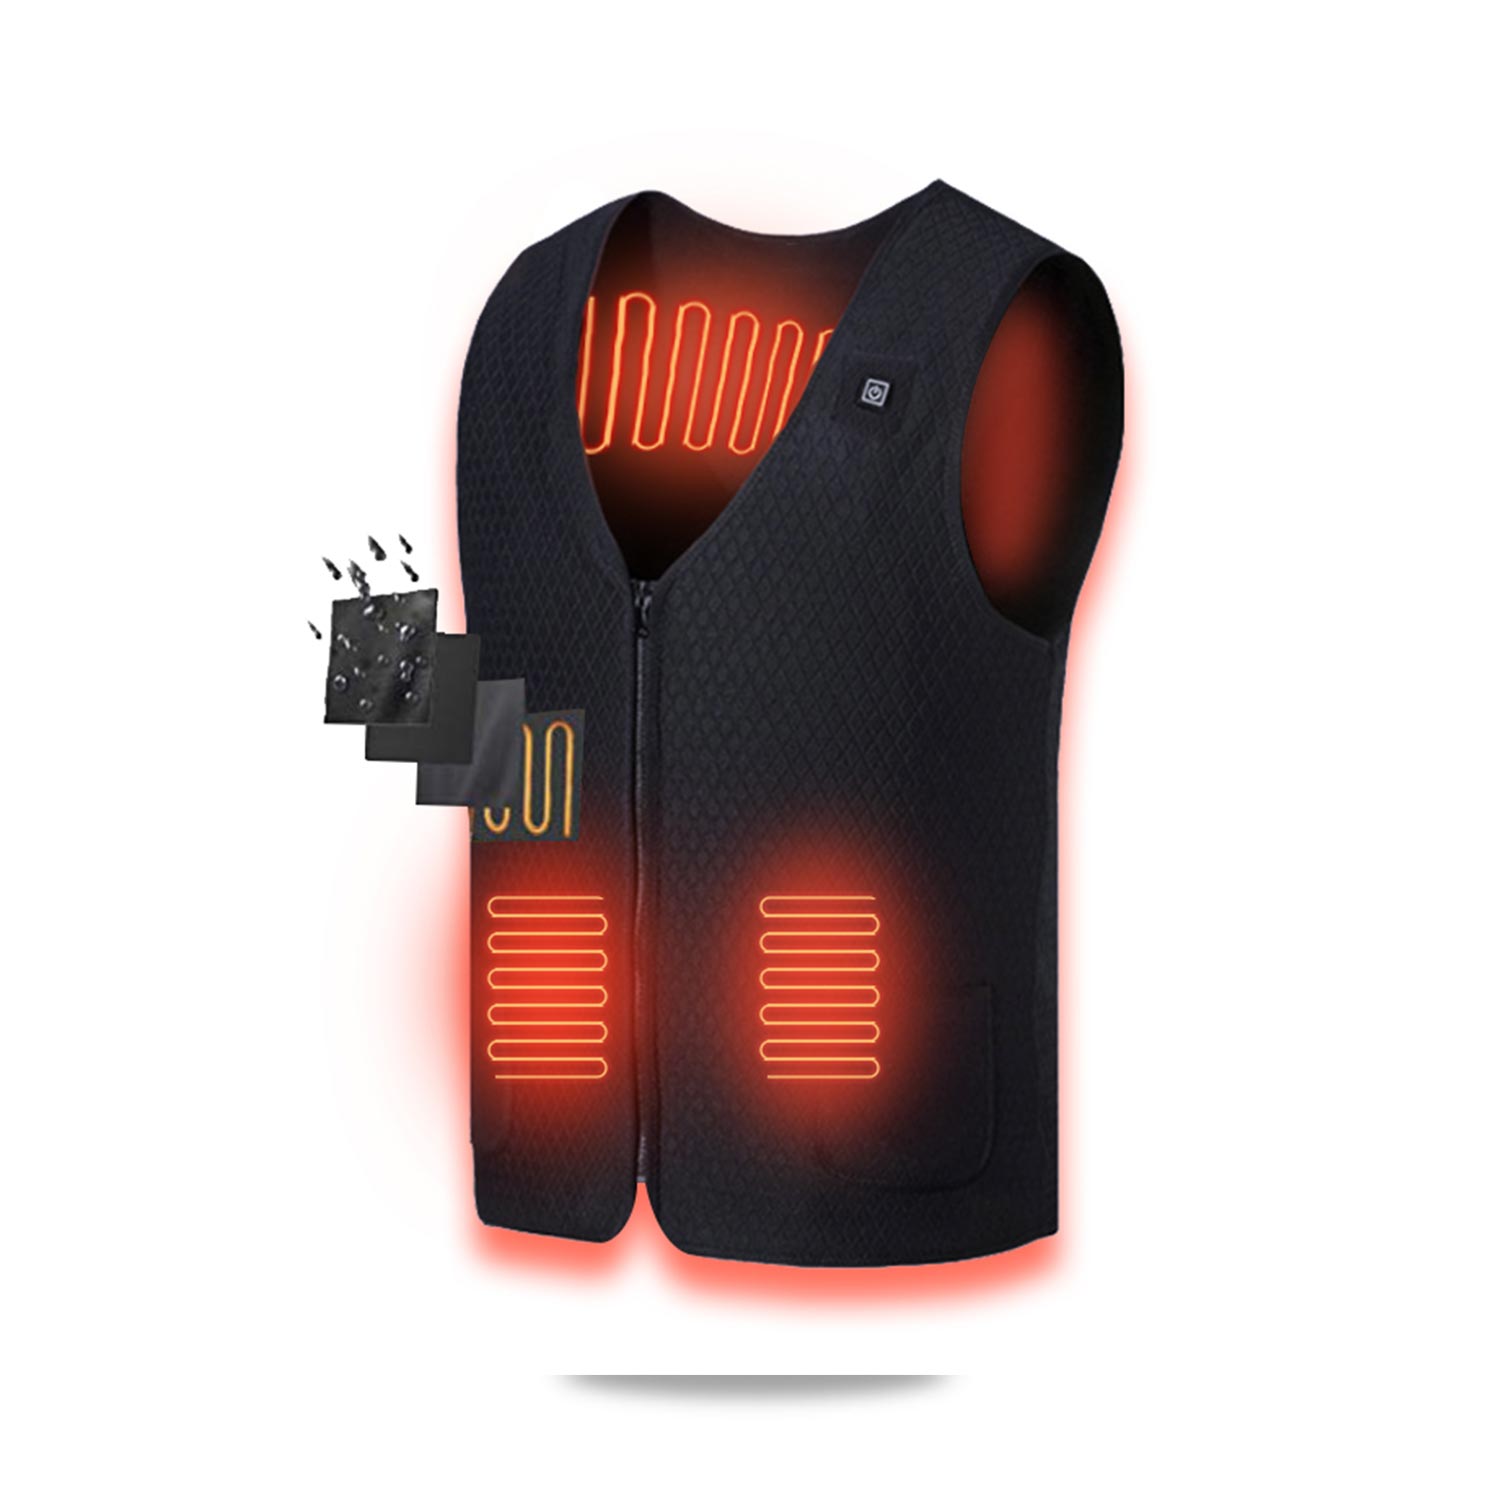 Battery heating vest